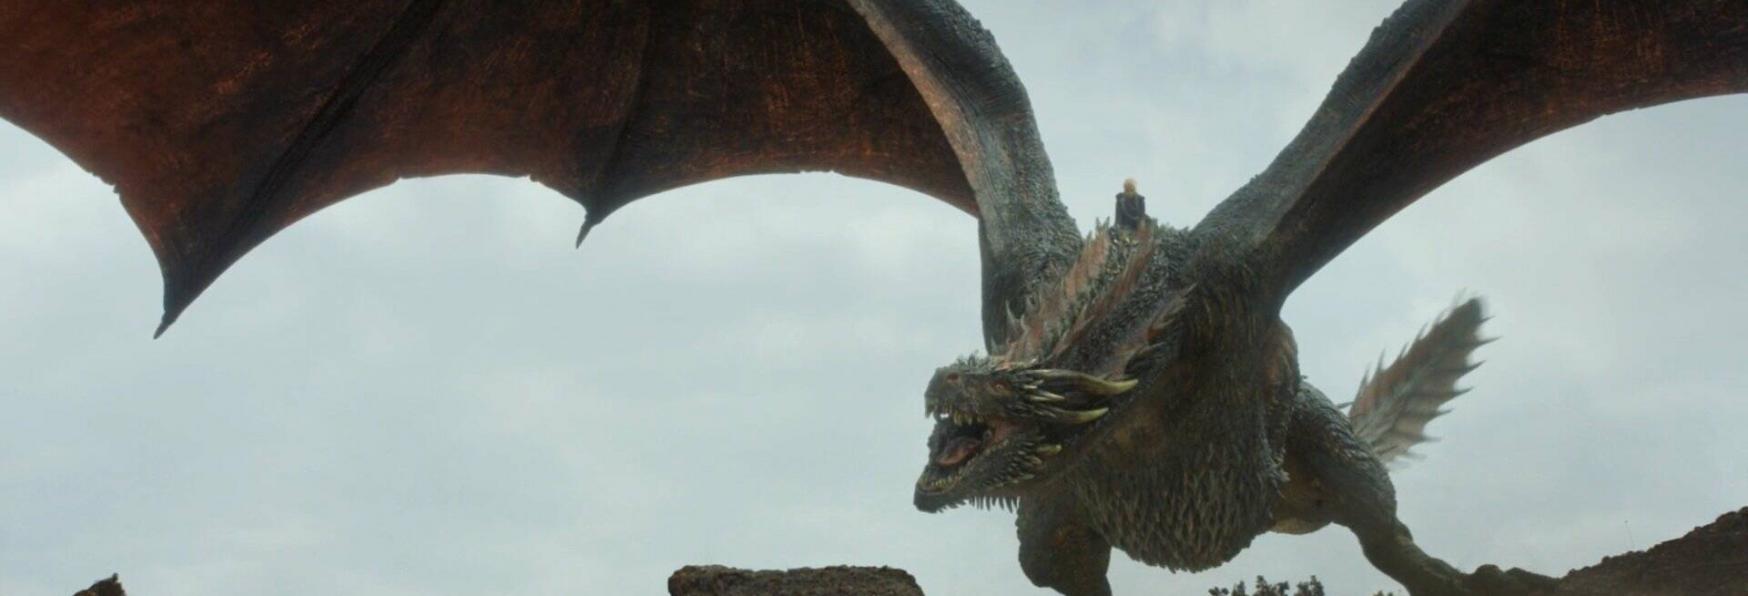 House of the Dragon: nuove Foto dal Set della Serie TV Spin-off di Game of Thrones